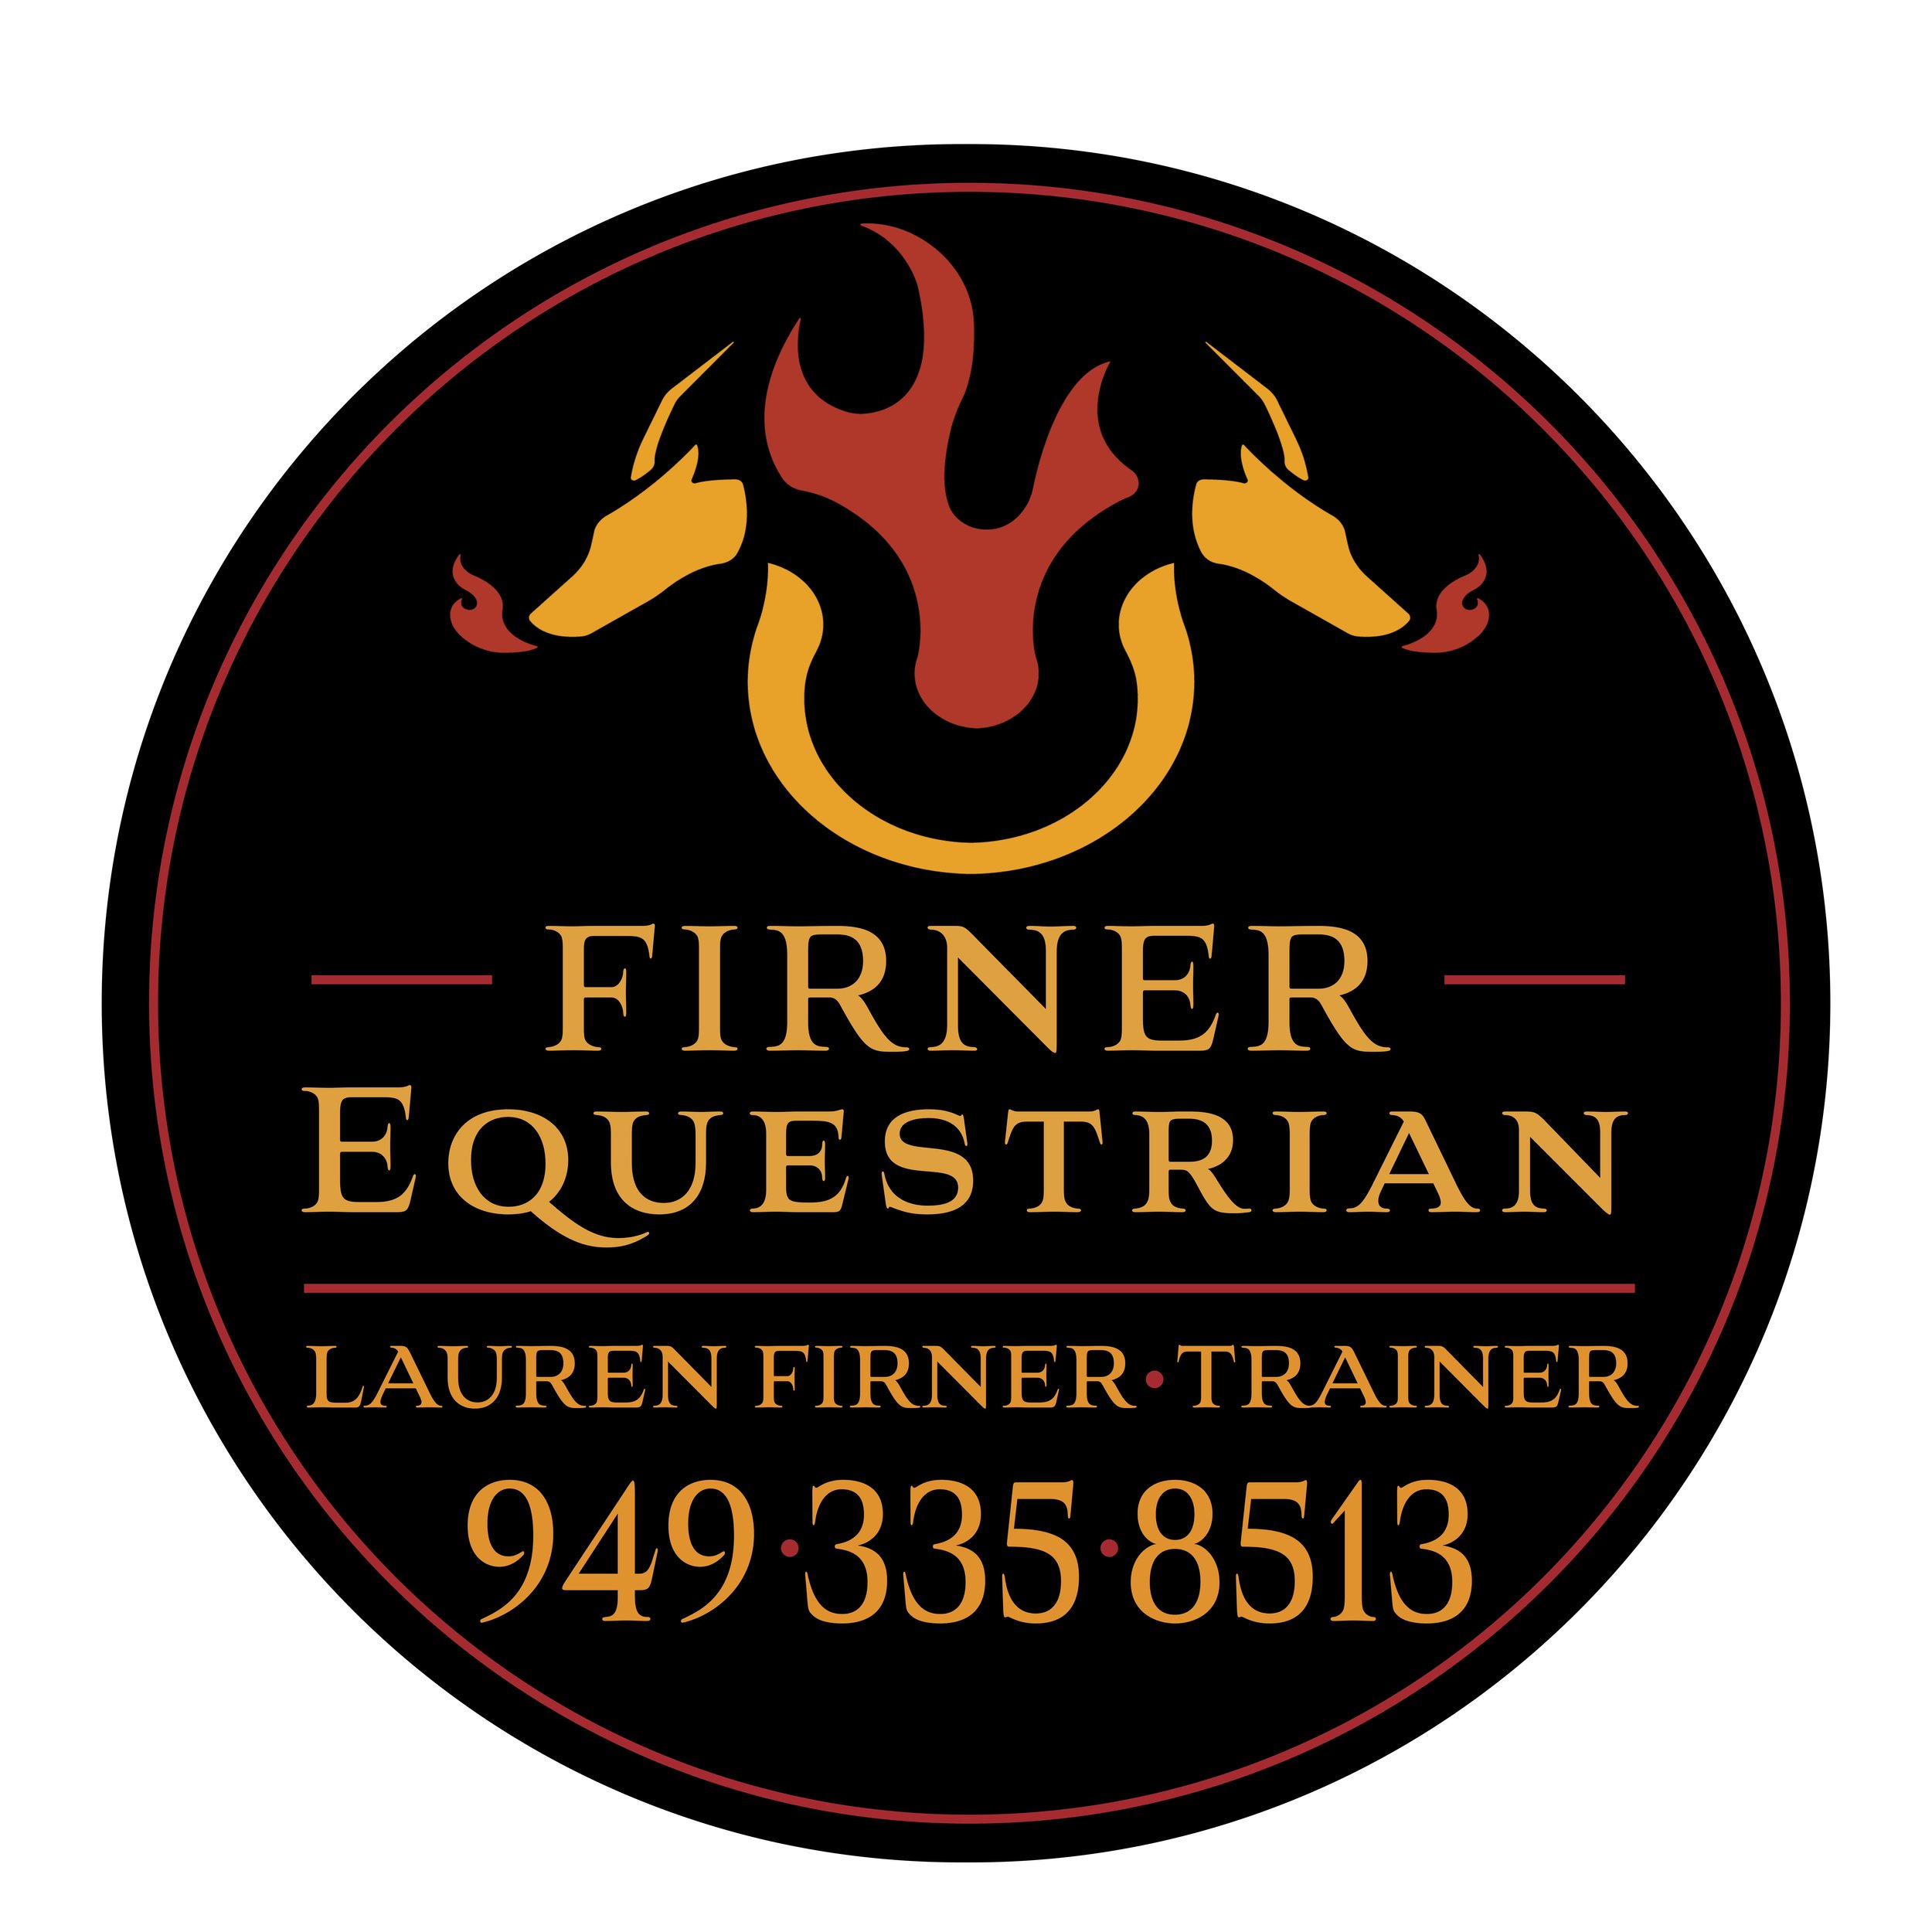 Firner-Equestrian-01 (1).jpg